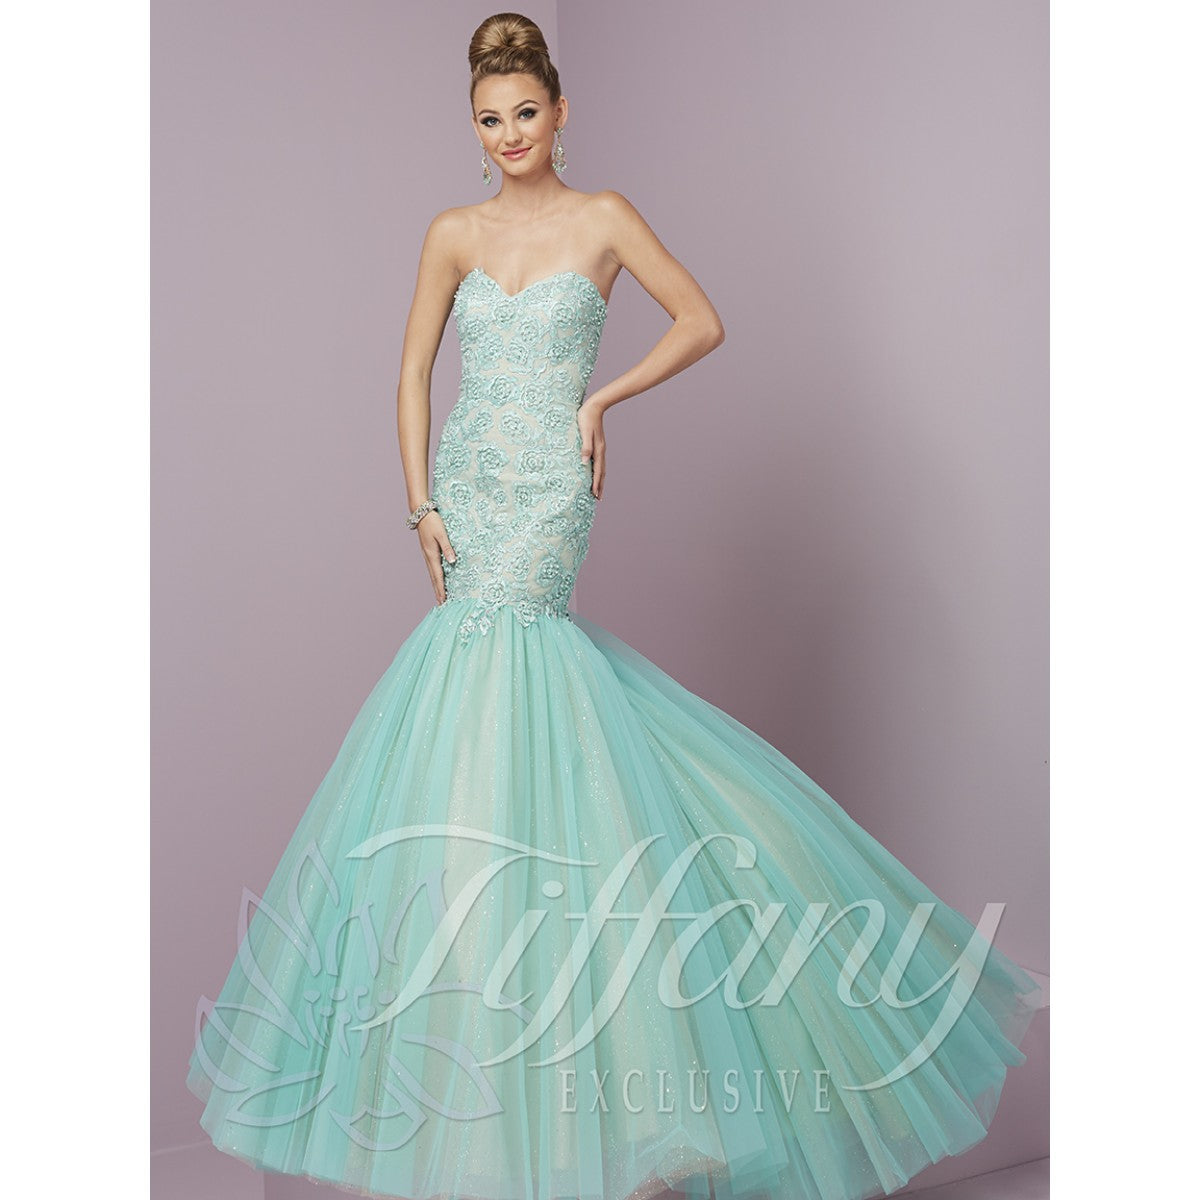 Tiffany Designs Tulle Mermaid Gown 46088 Aqua/Nude